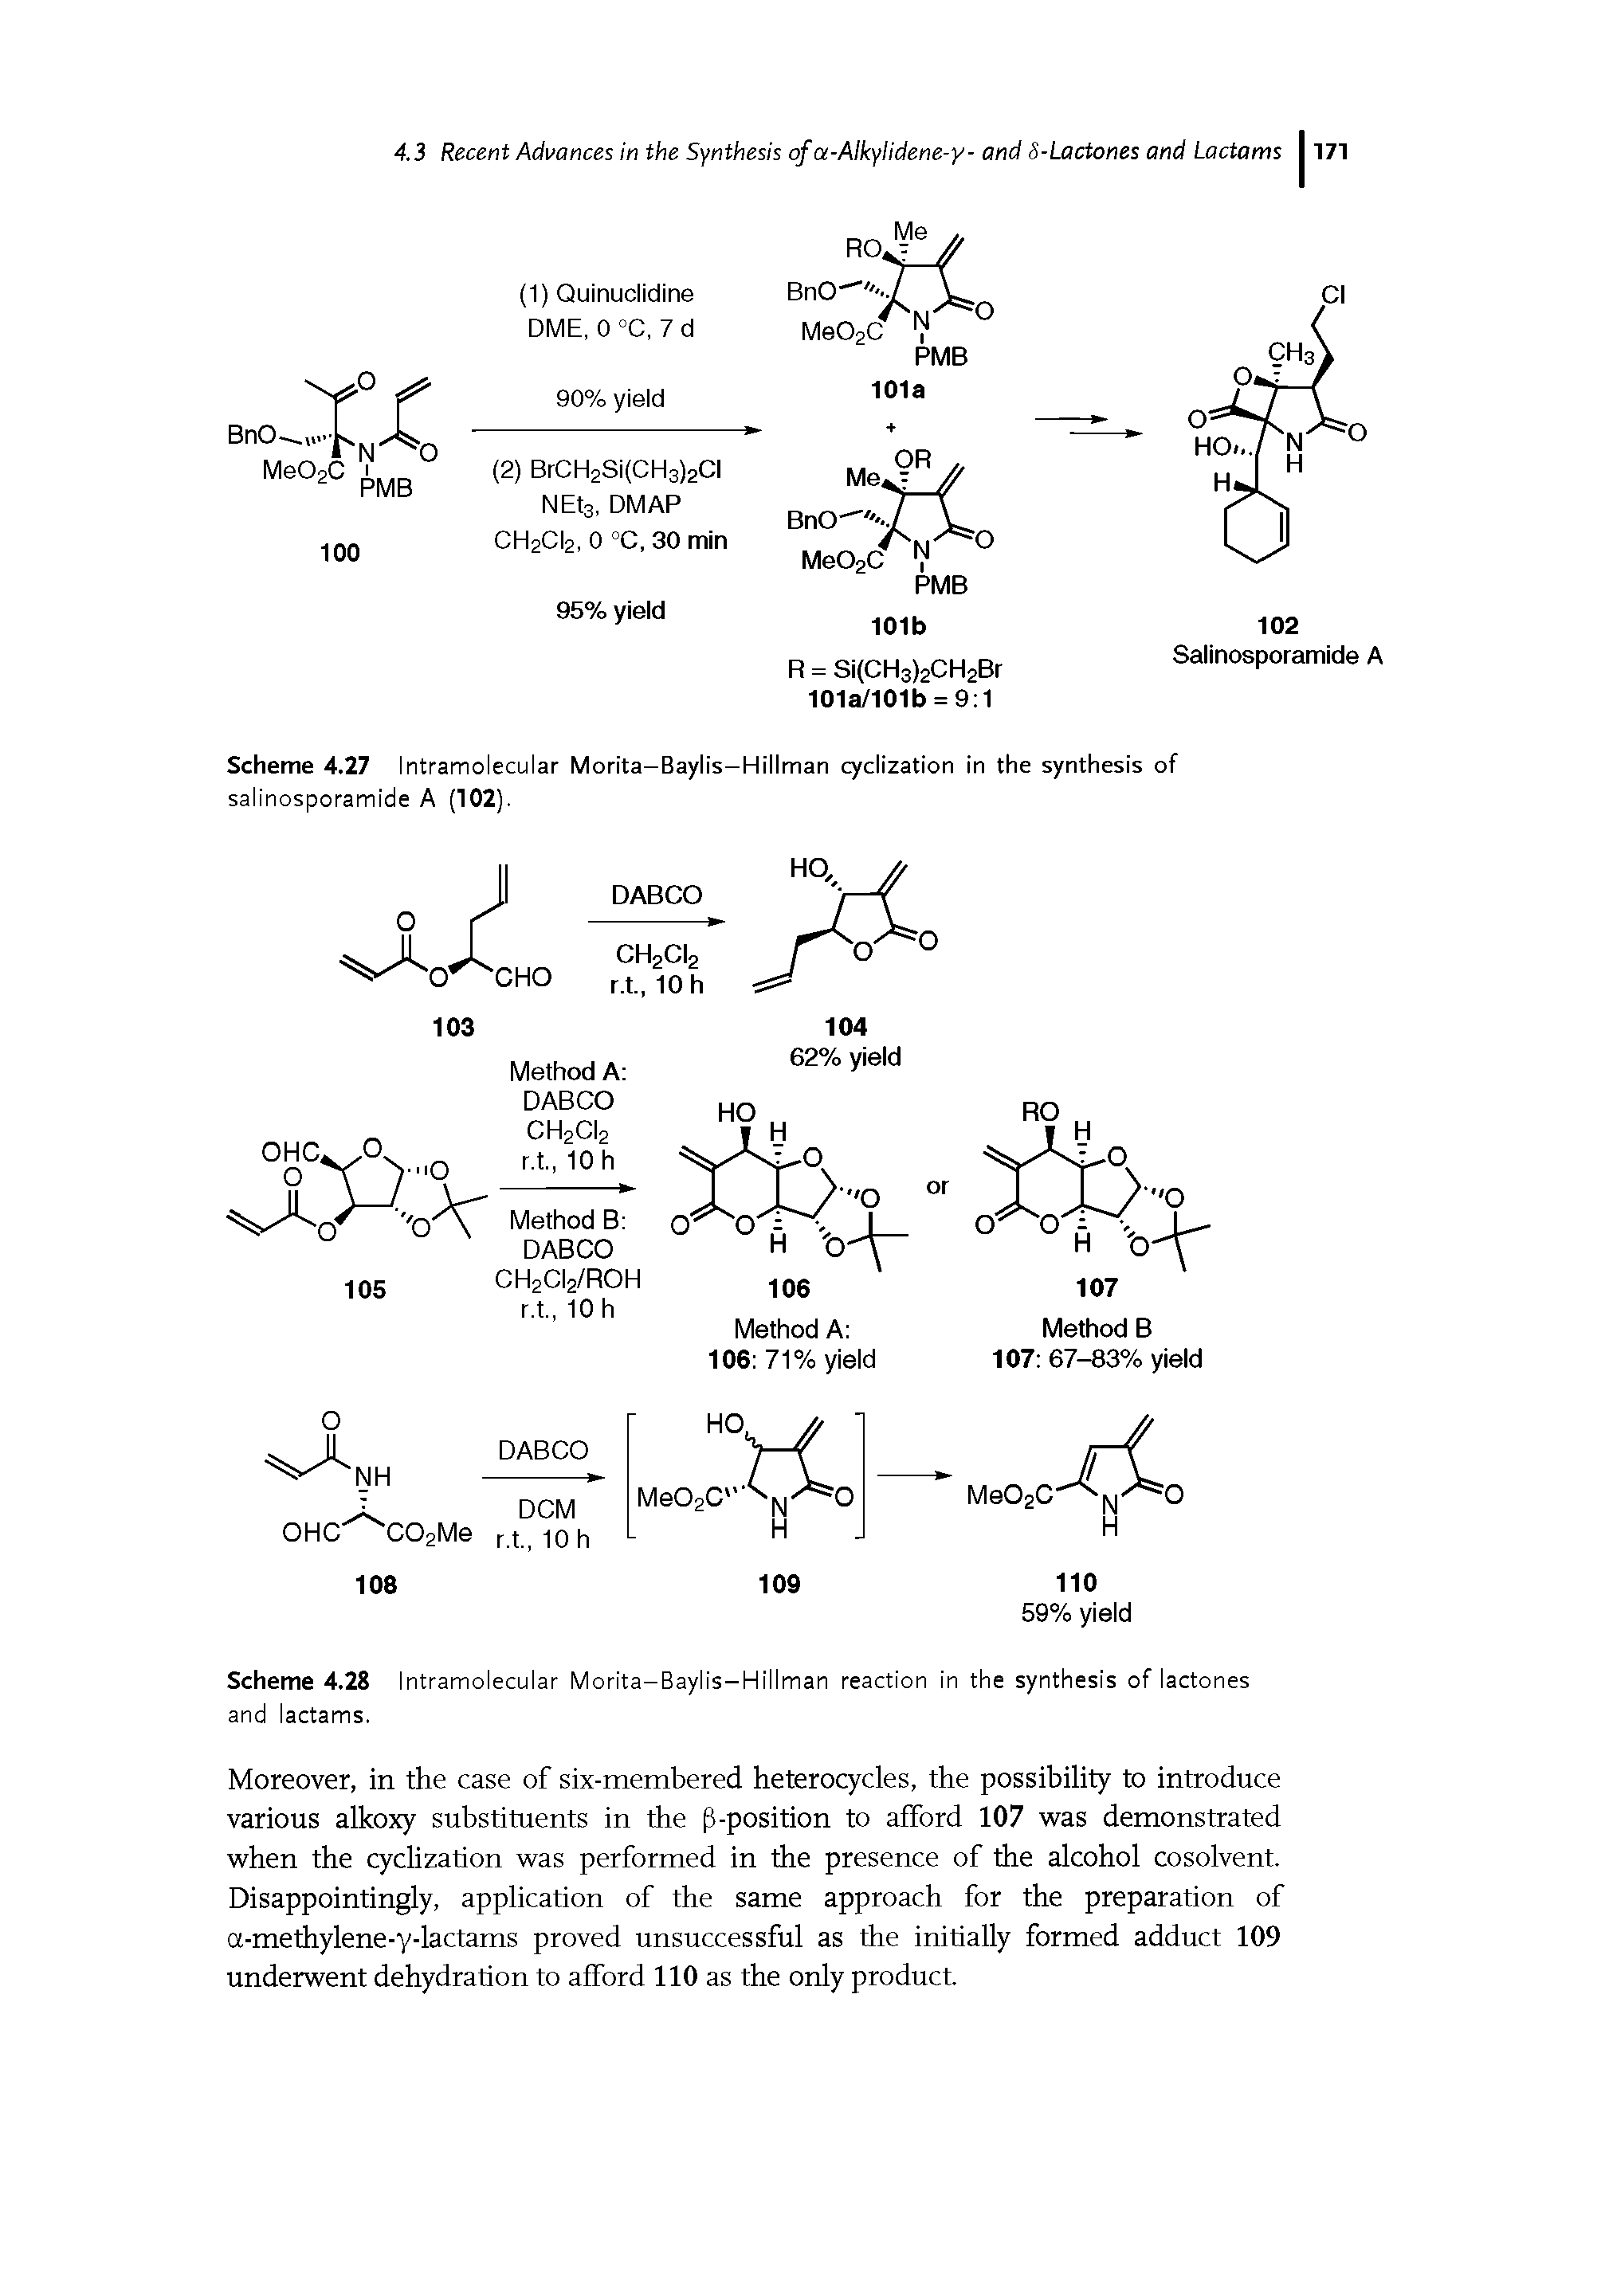 Scheme 4.28 Intramolecular Morita-Baylis-Hillman reaction in the synthesis of lactones and lactams.